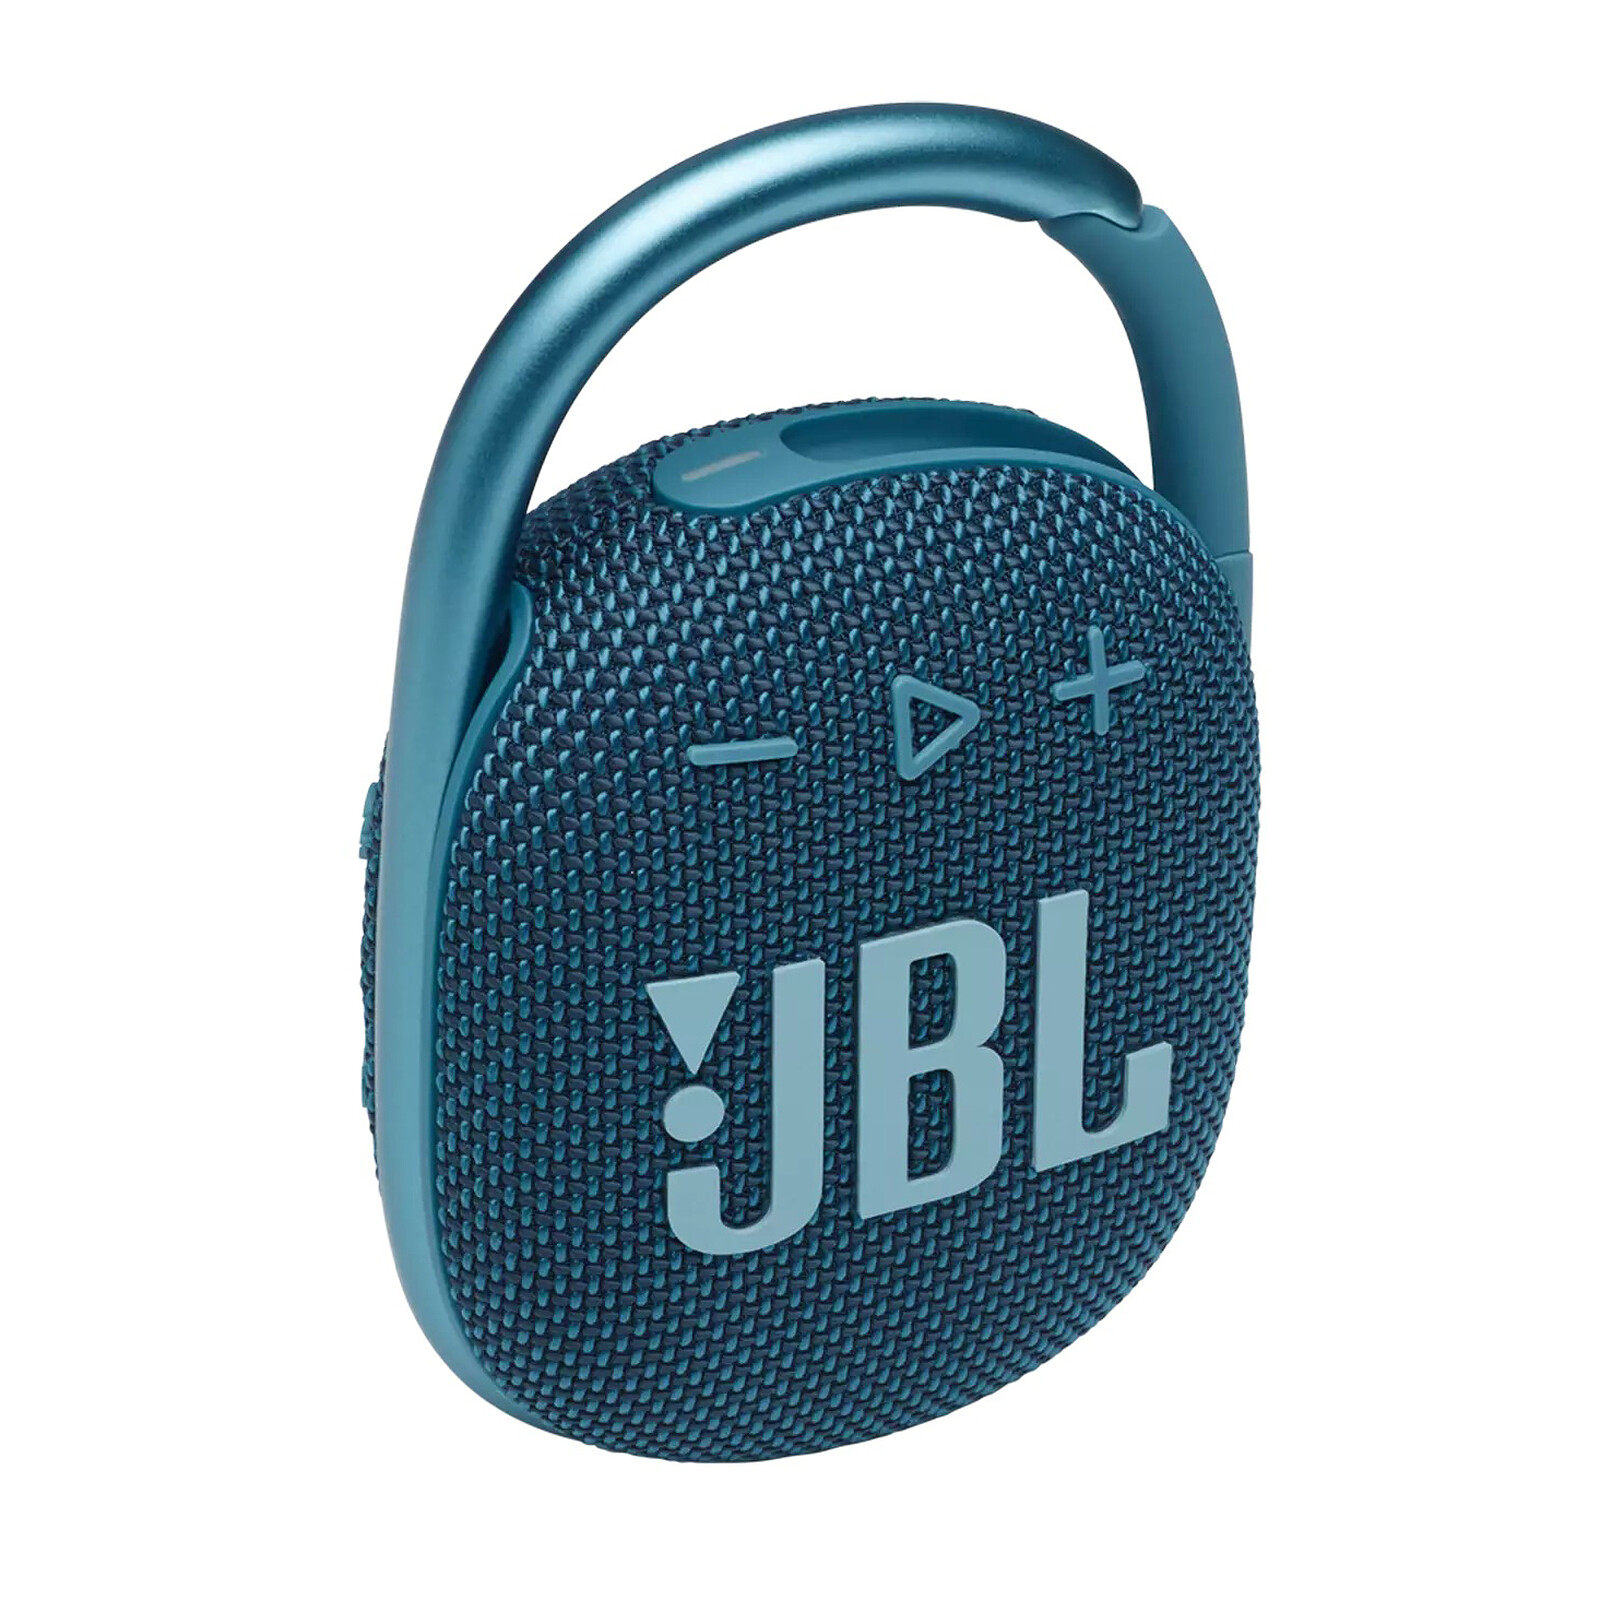 Enceinte Bluetooth Flip 4 bleue de JBL